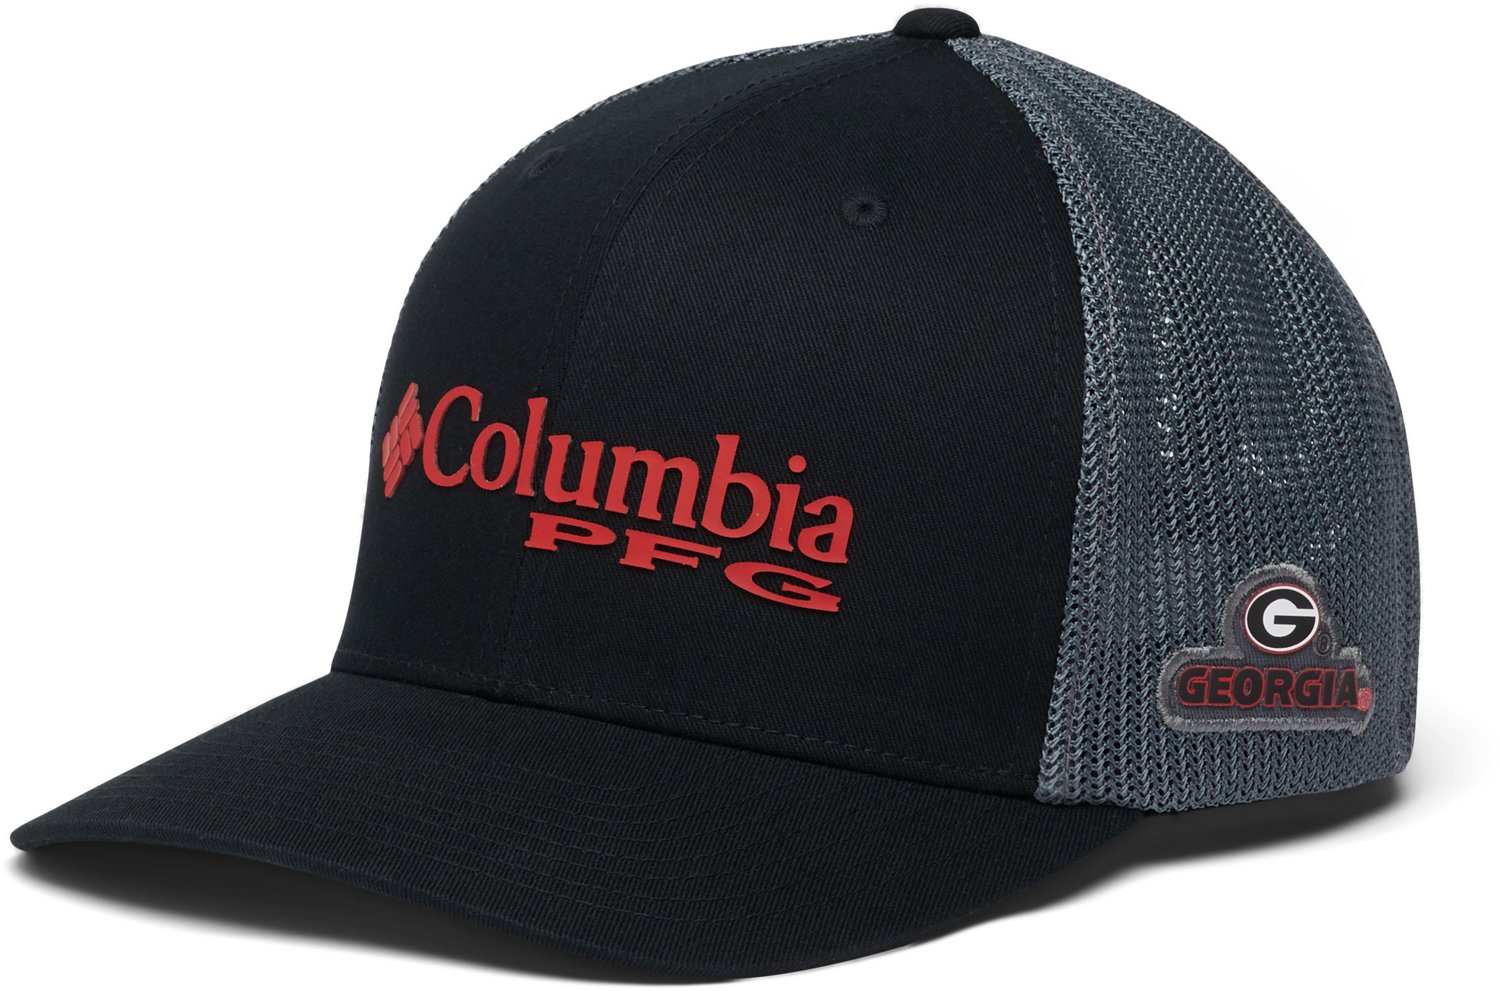 Columbia Sportswear Adults' University of Georgia PFG Mesh Ball Cap